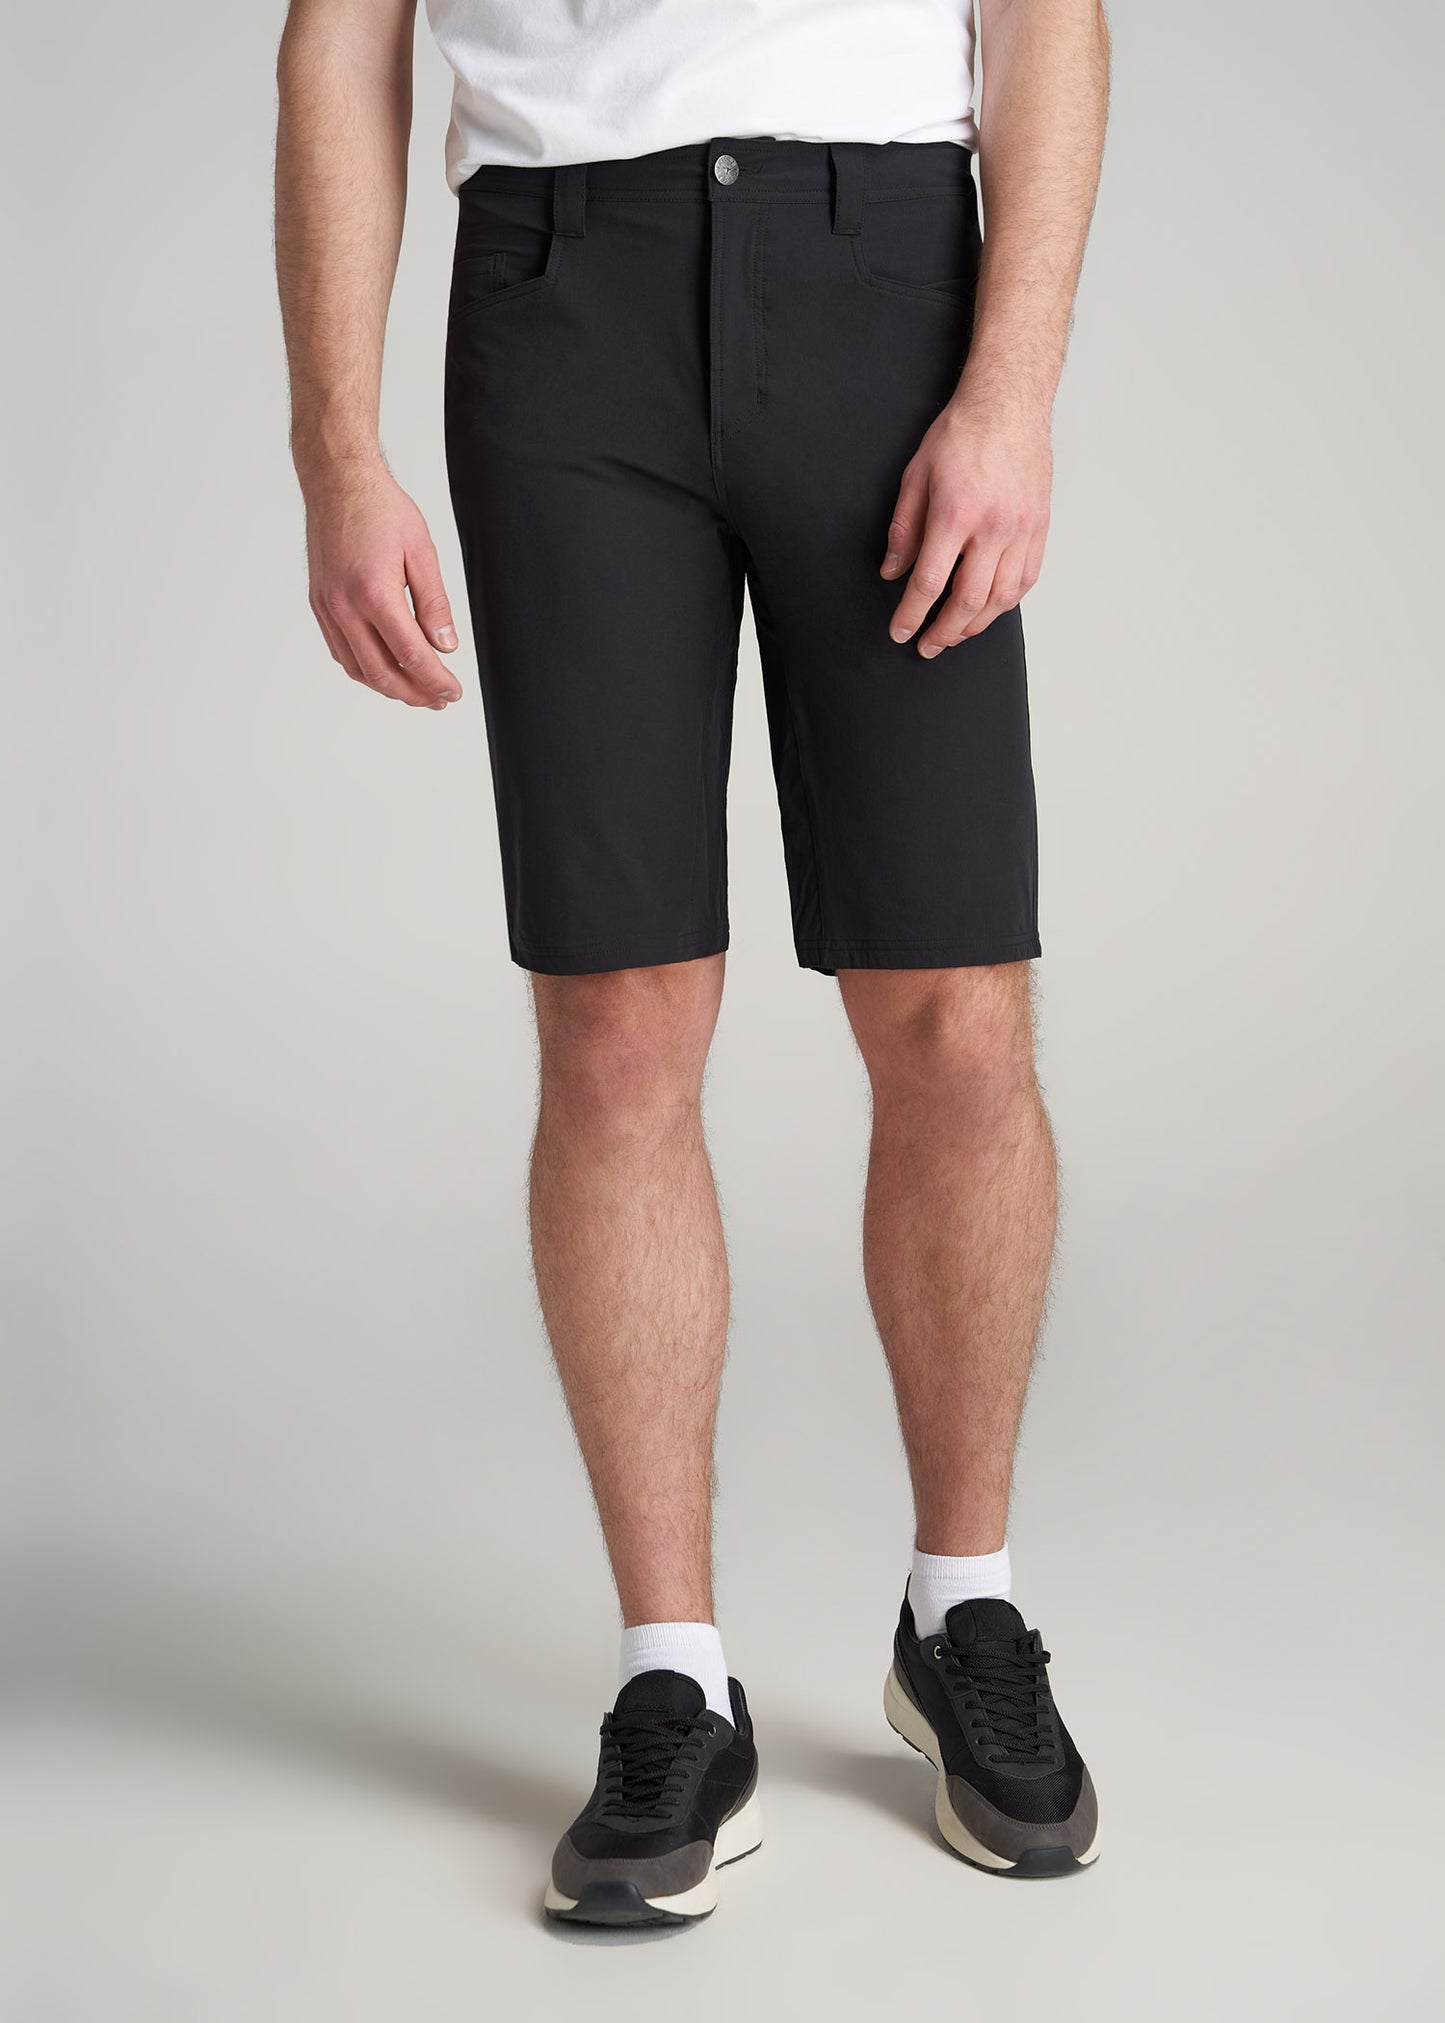       American-Tall-Men-Hiking-Shorts-Black-front